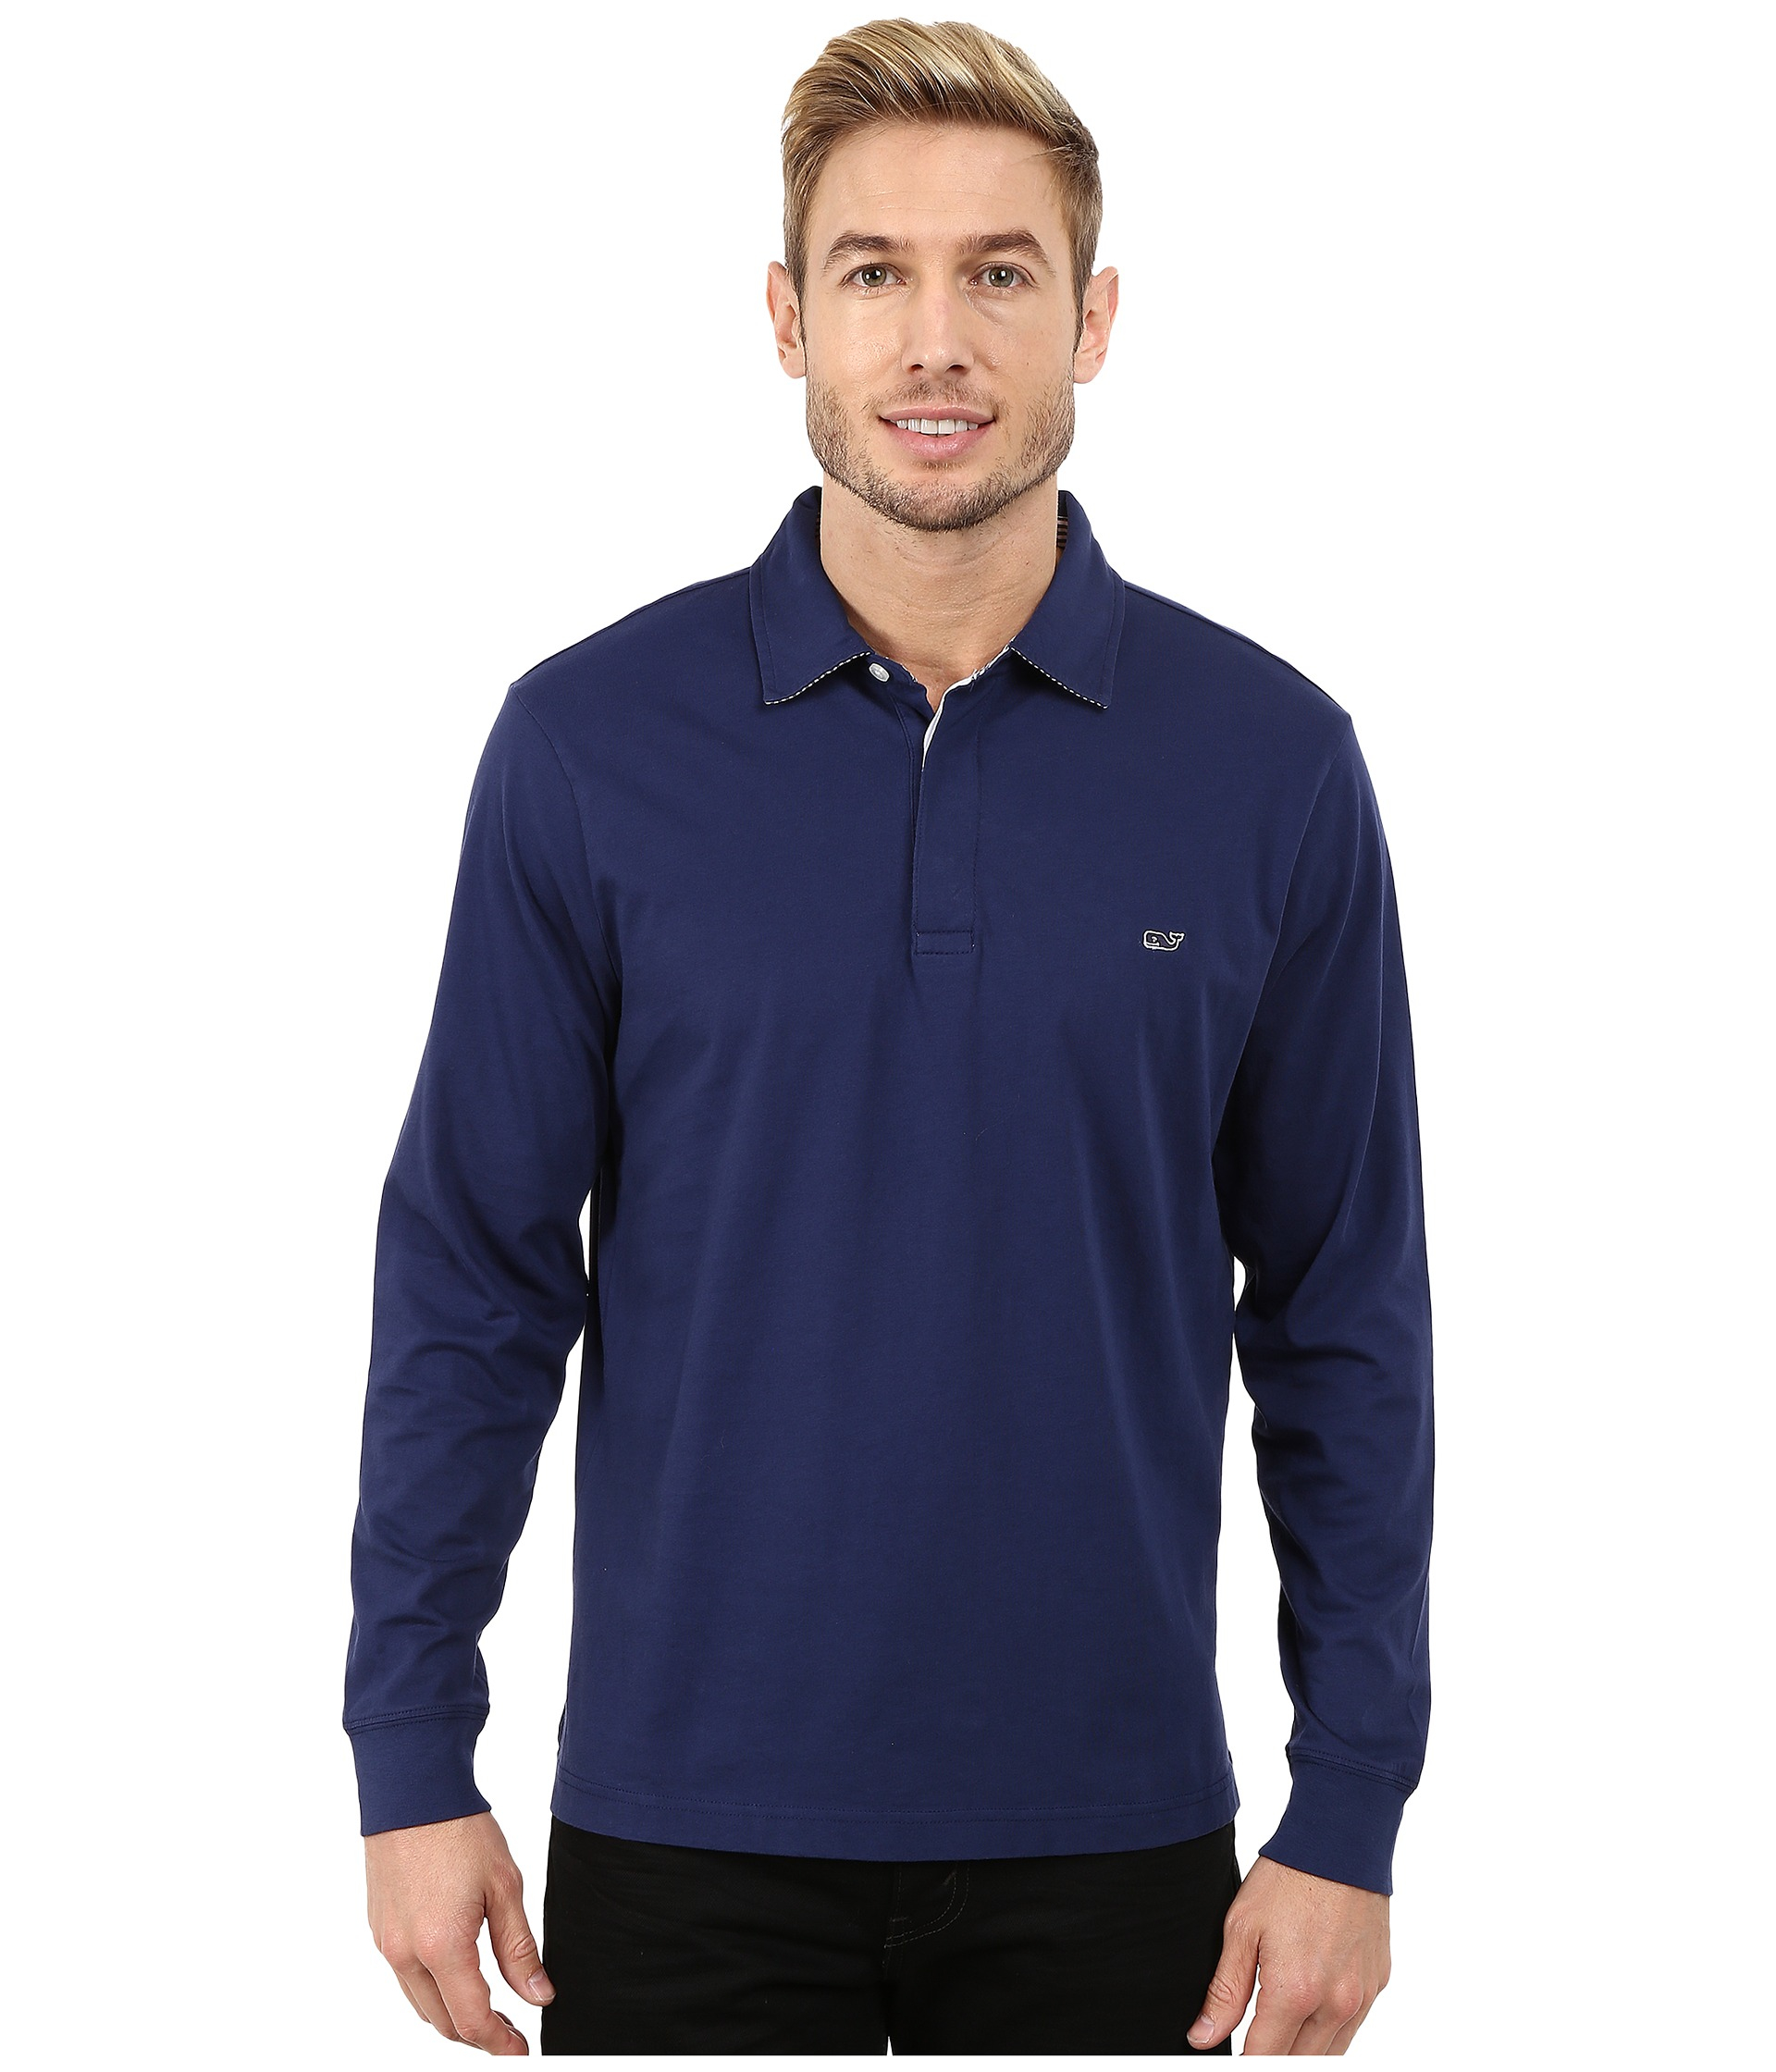 Vineyard Vines Mallery Long Sleeve Jersey Polo in Blue for Men - Lyst